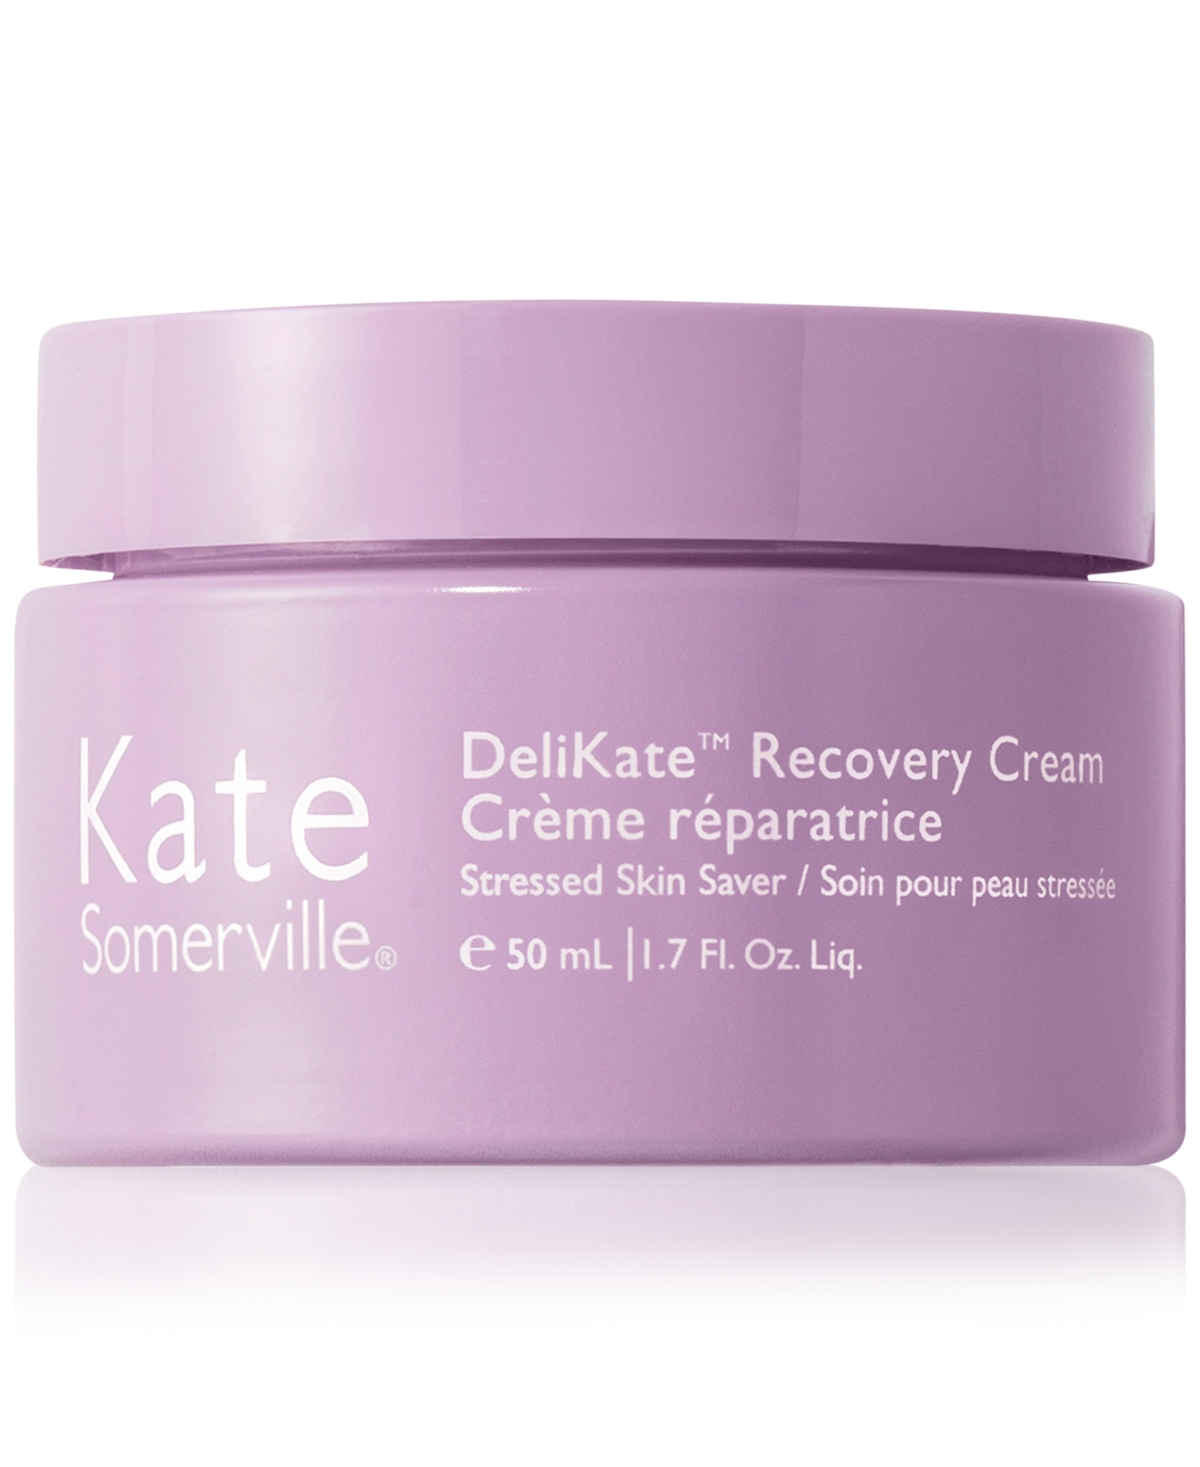 DeliKate Recovery Cream, 1.7 oz.